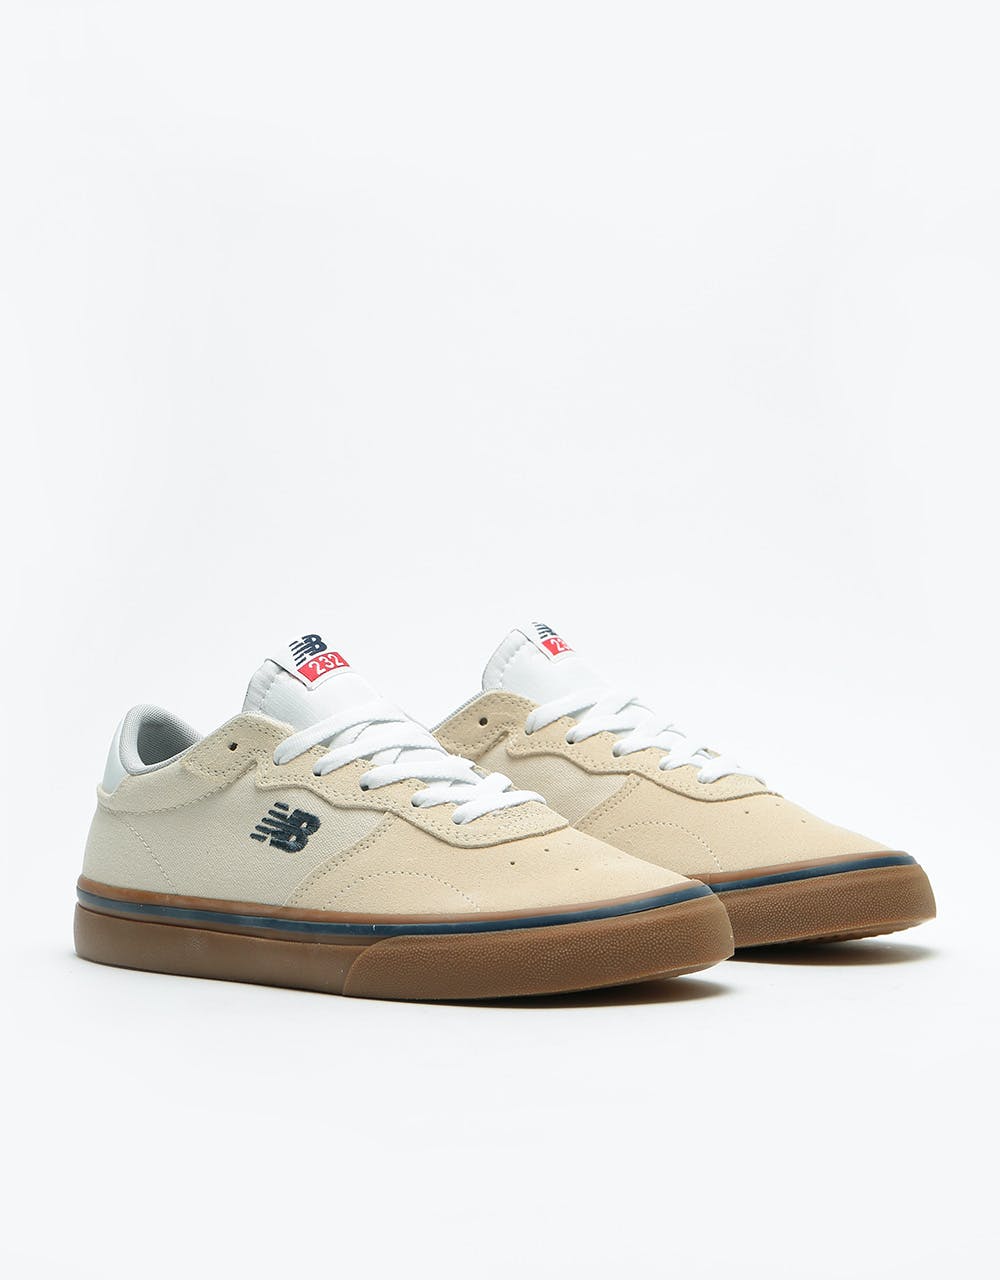 New Balance AM232 Skate Shoes - White/Gum